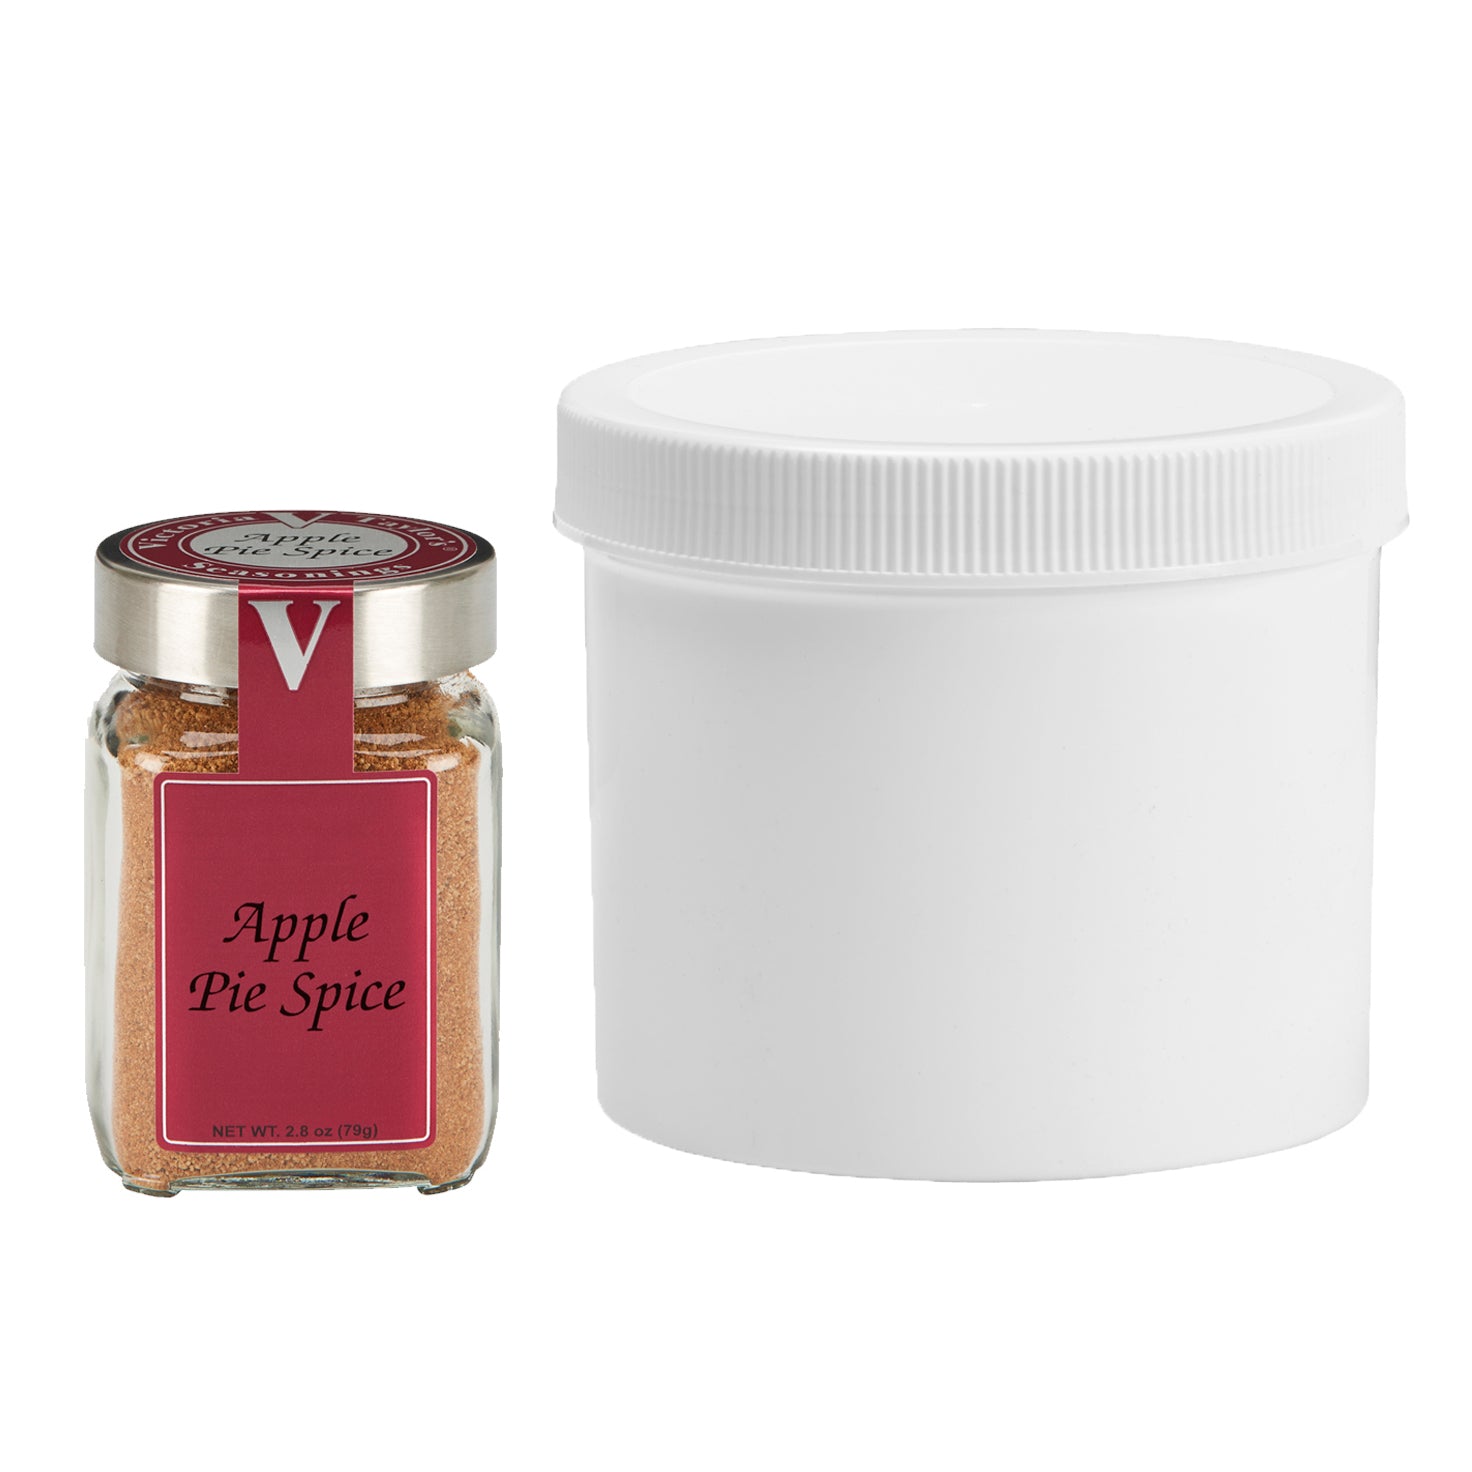 Apple Pie Spice – Victoria Gourmet